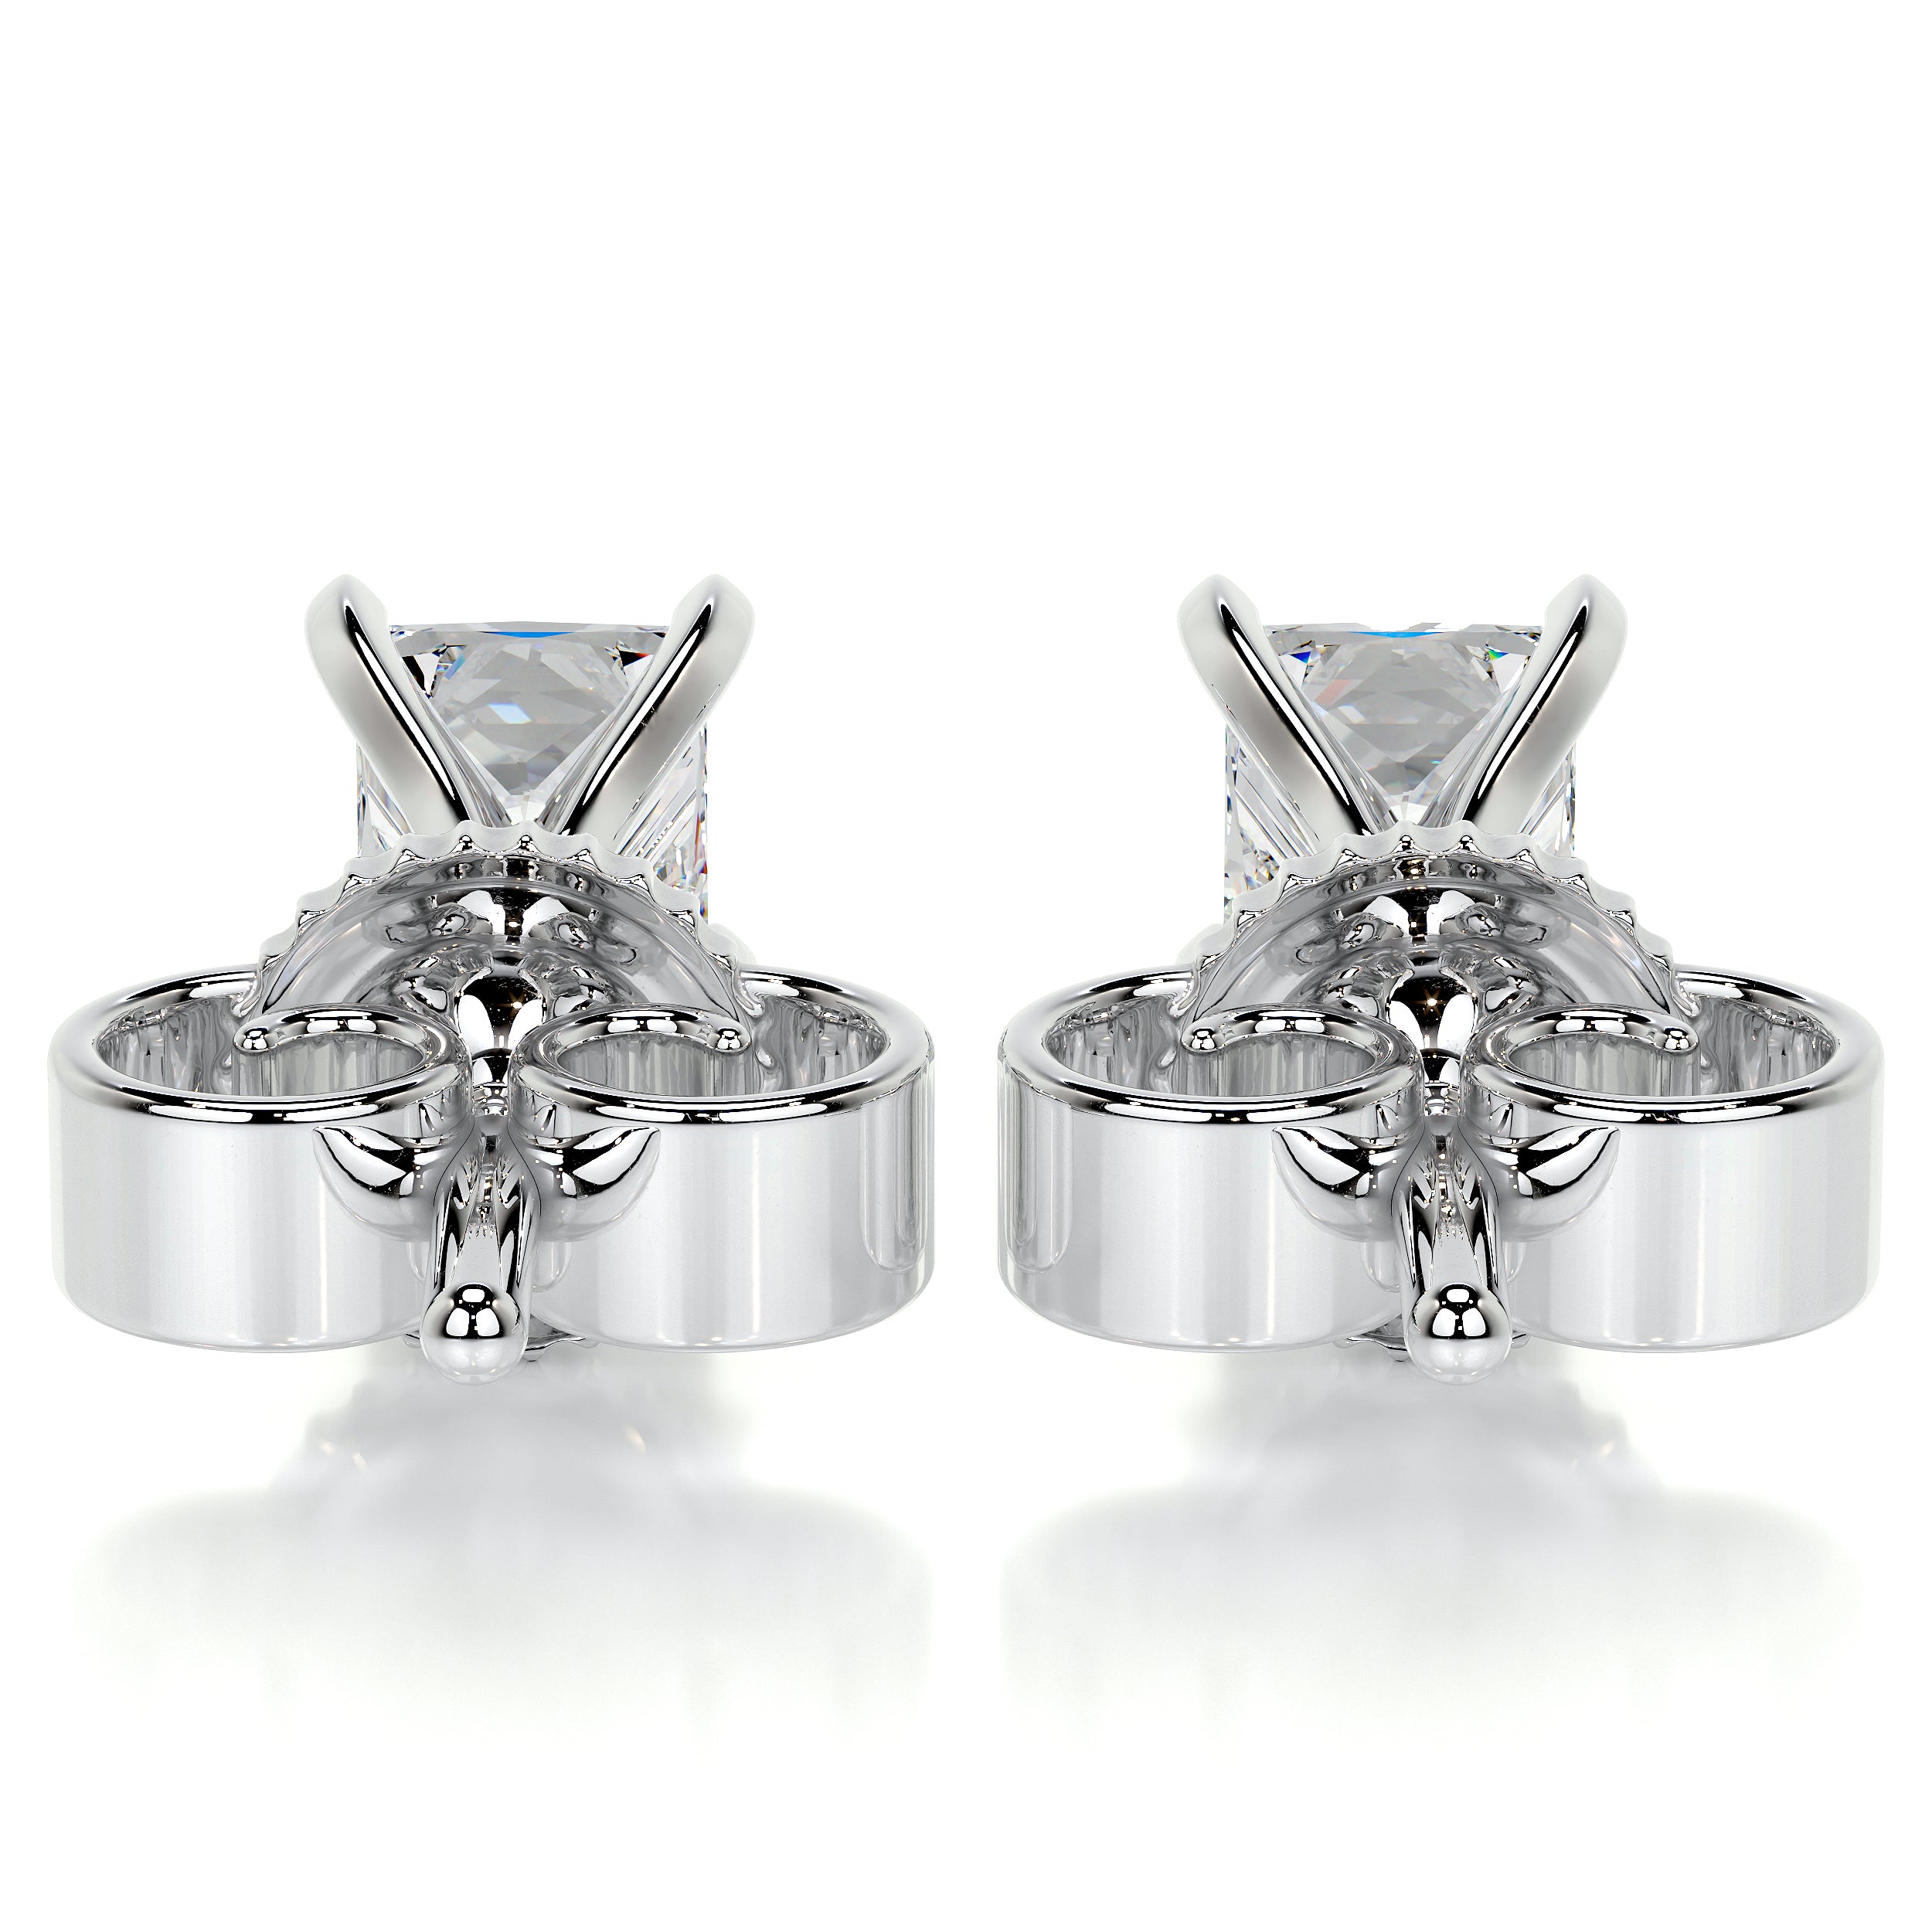 Magnolia Diamond Earrings   (4 Carat) -14K White Gold